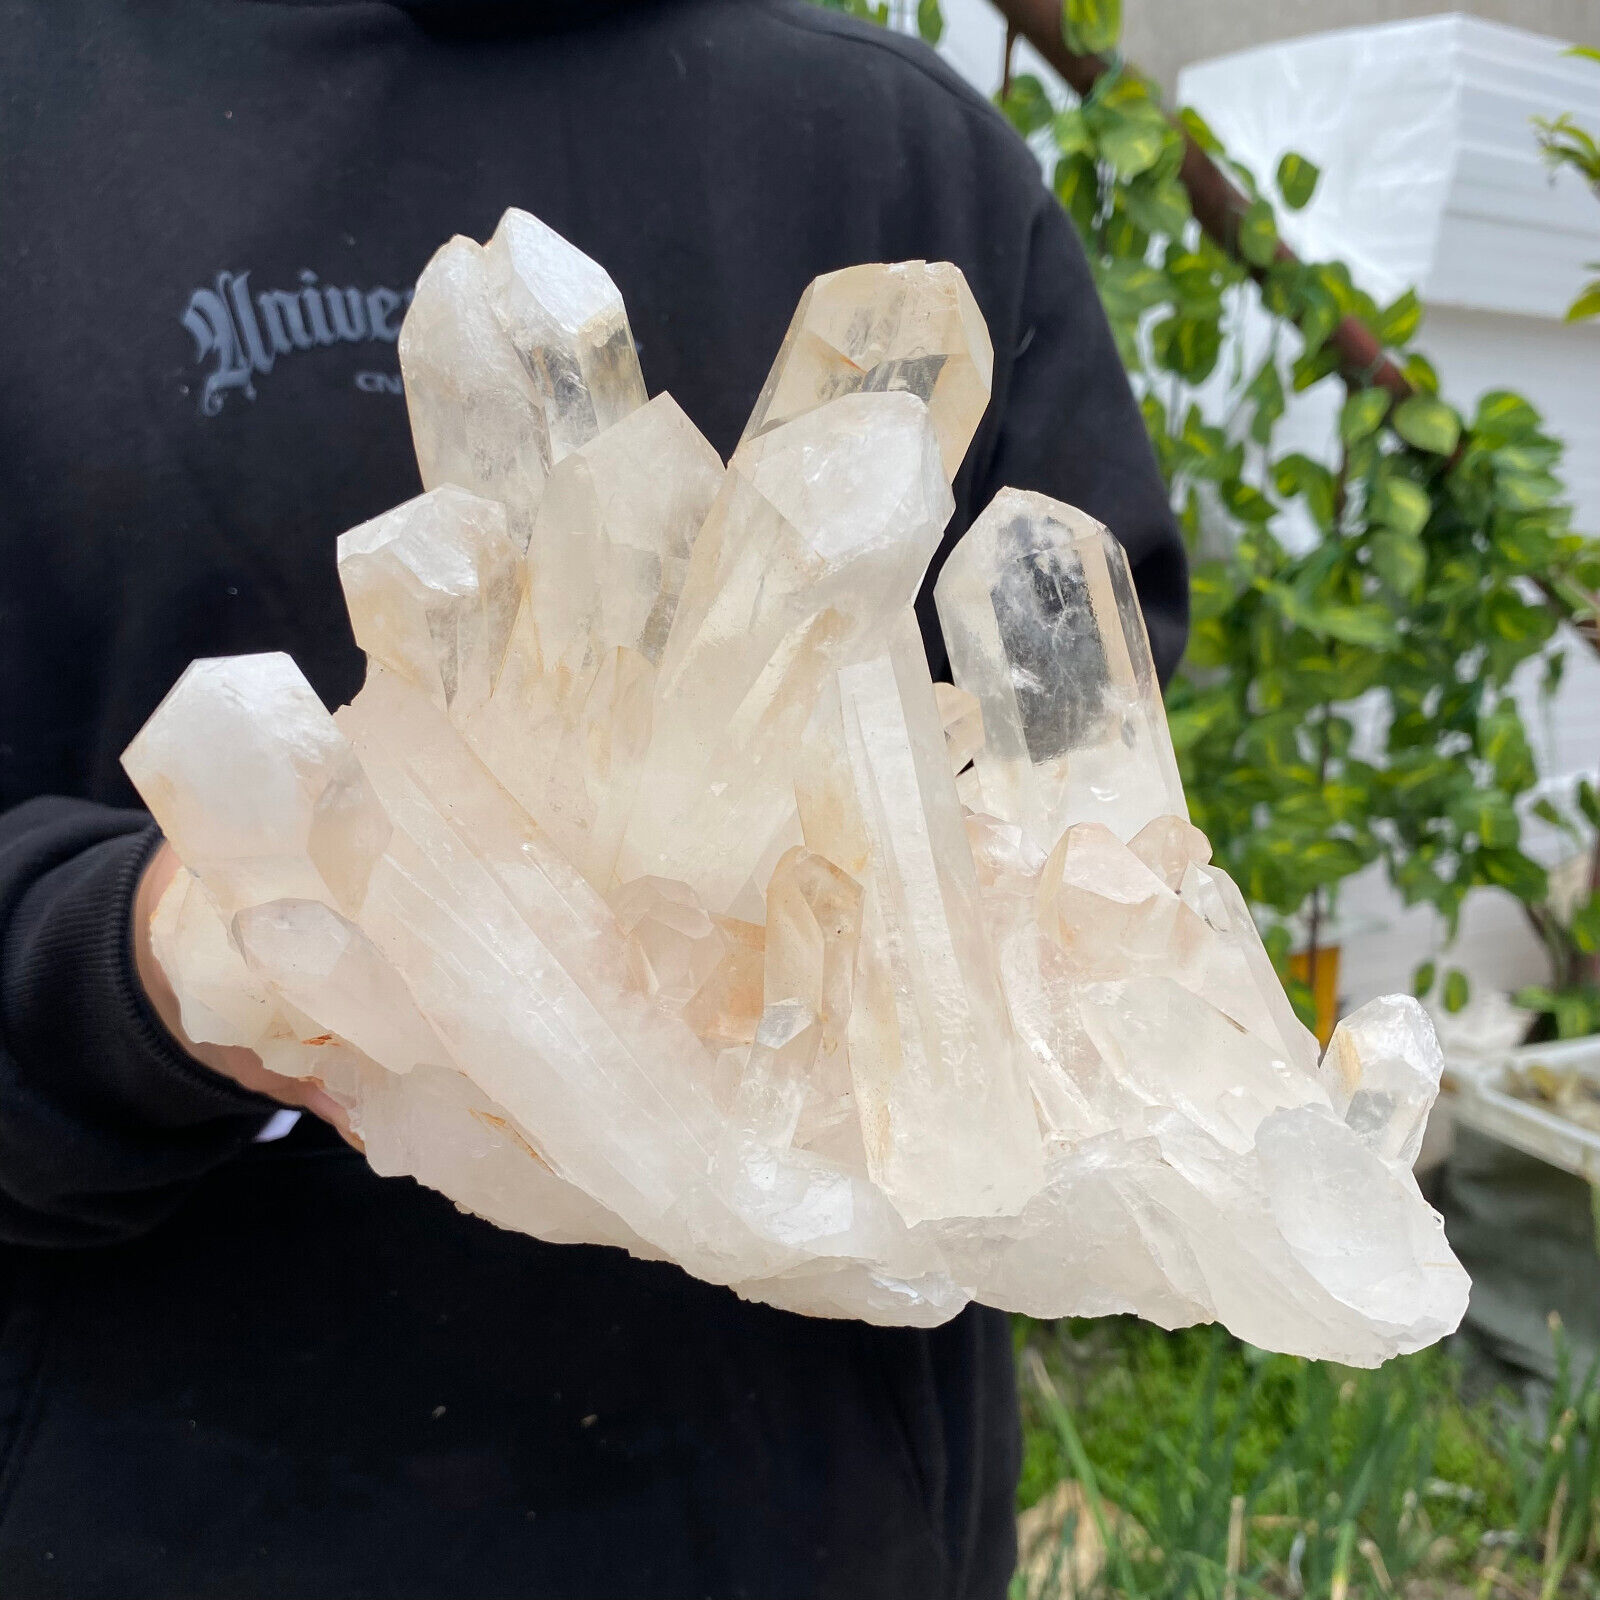 6lb Large Natural Clear White Quartz Crystal Cluster Rough Healing Specimen